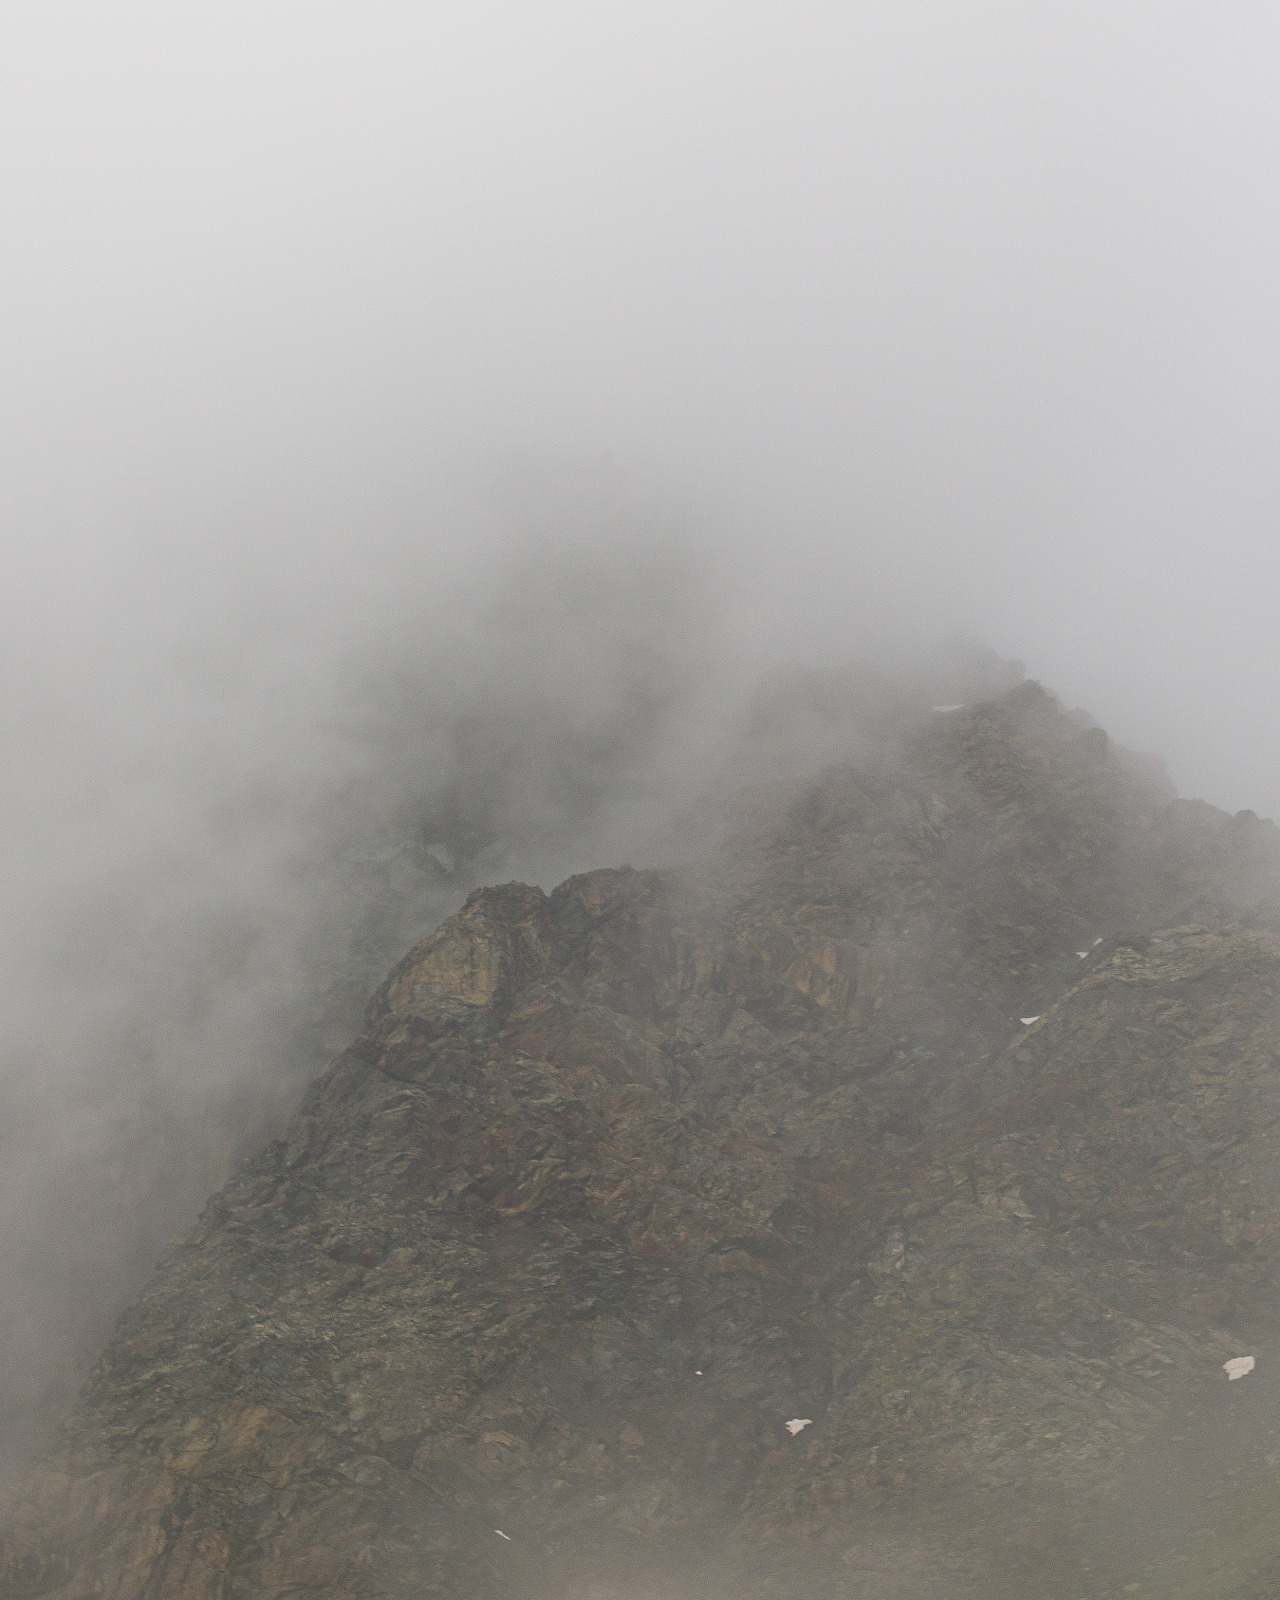 Misty Mountains 24/?   - Tour de Monte Rosa, July 2021photo by: nature-hiking #mist#fog#mountains#alps#landscape#misty mountains#TMR #Tour de Monte Rosa  #long distance trail #wilderness#hiking#trekking#nature#photography#original photography #photographers on tumblr #TMR 2021